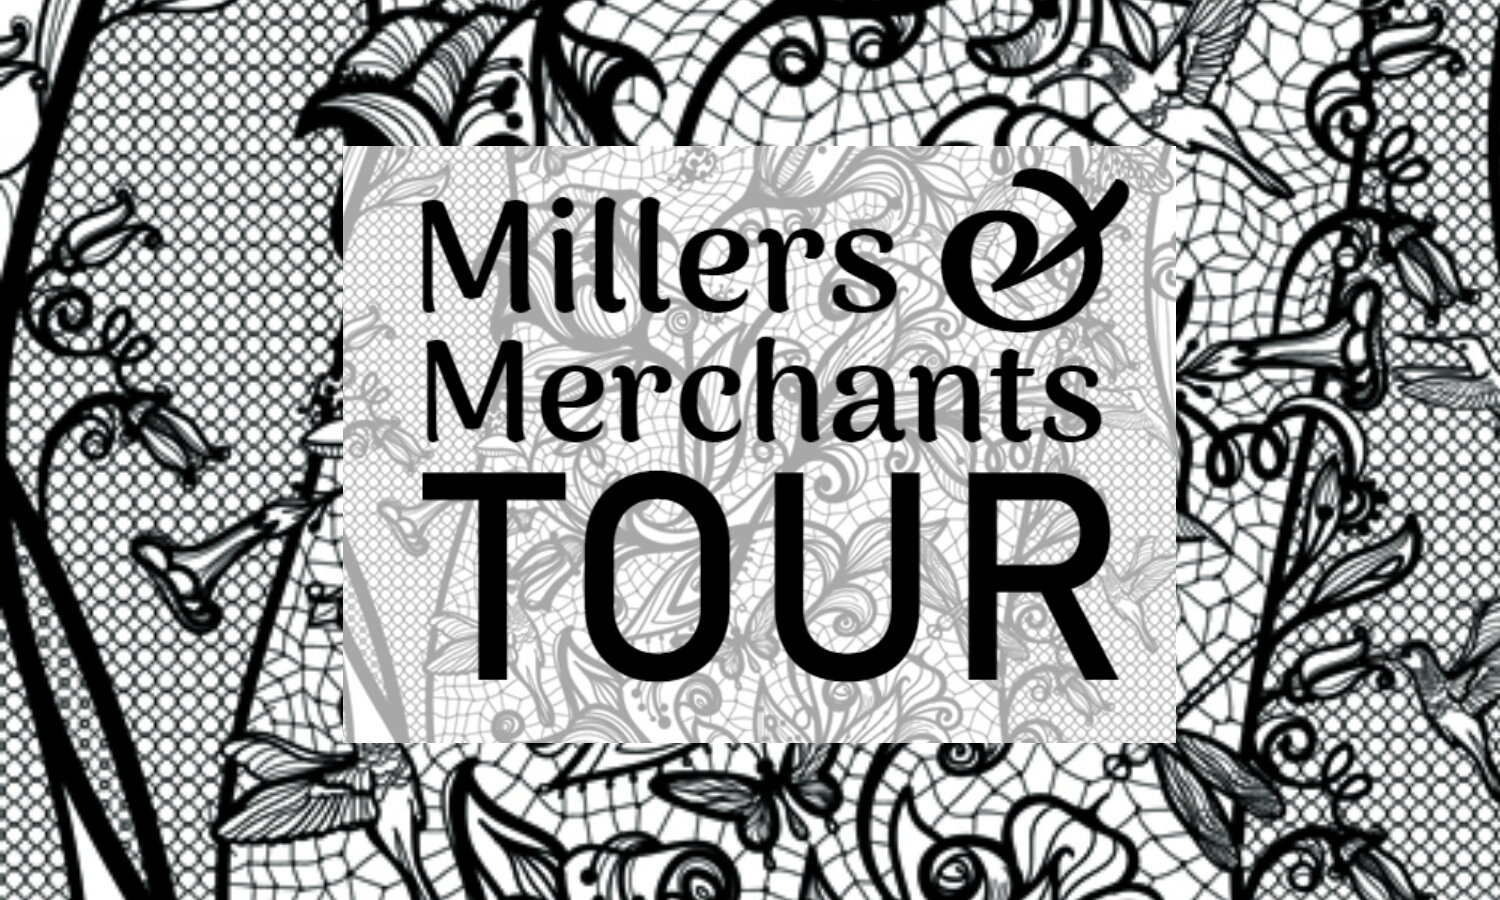 Millers and Merchants 4 3a.jpg